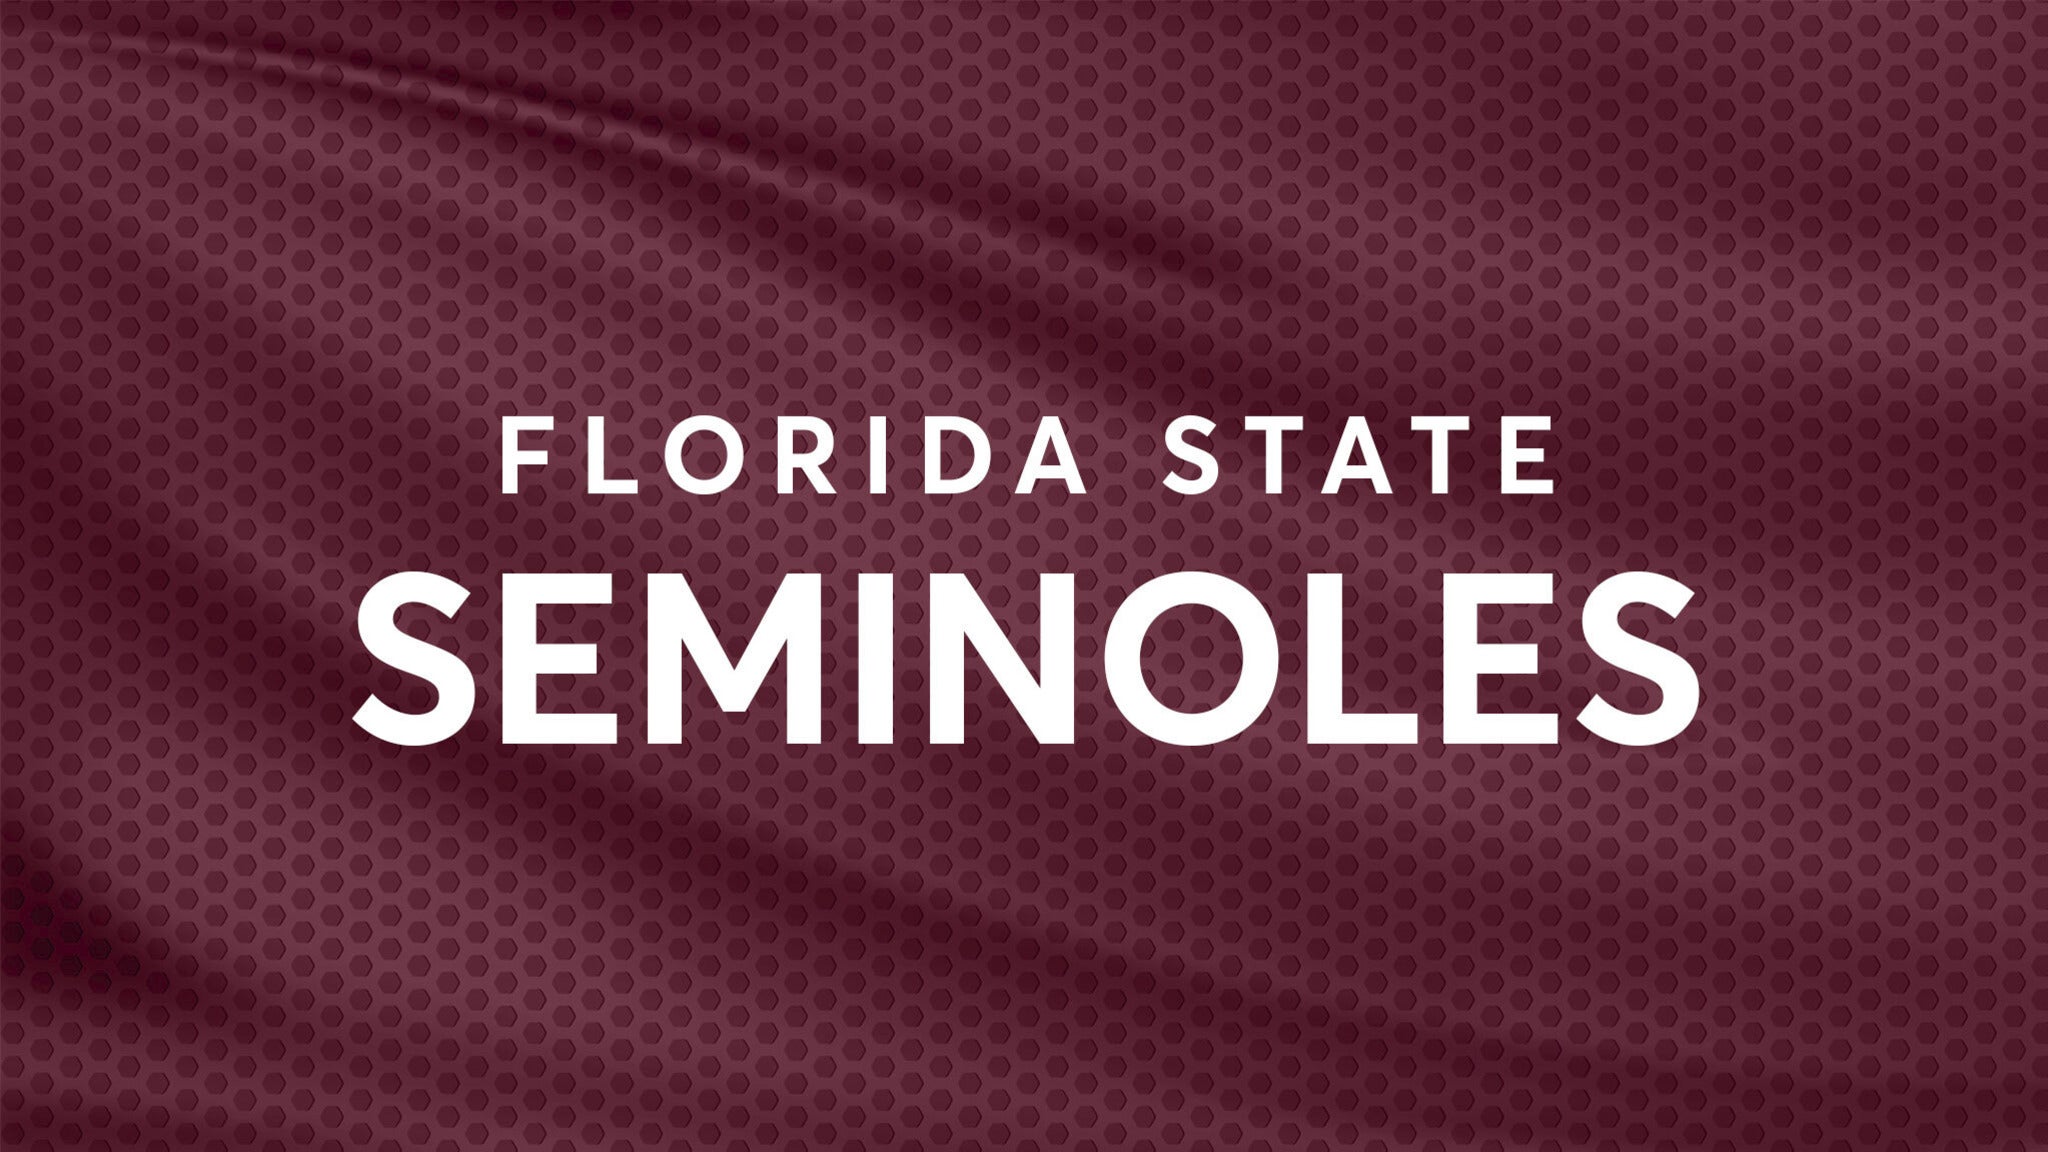 Florida State Seminoles Football vs. Florida Gators Football